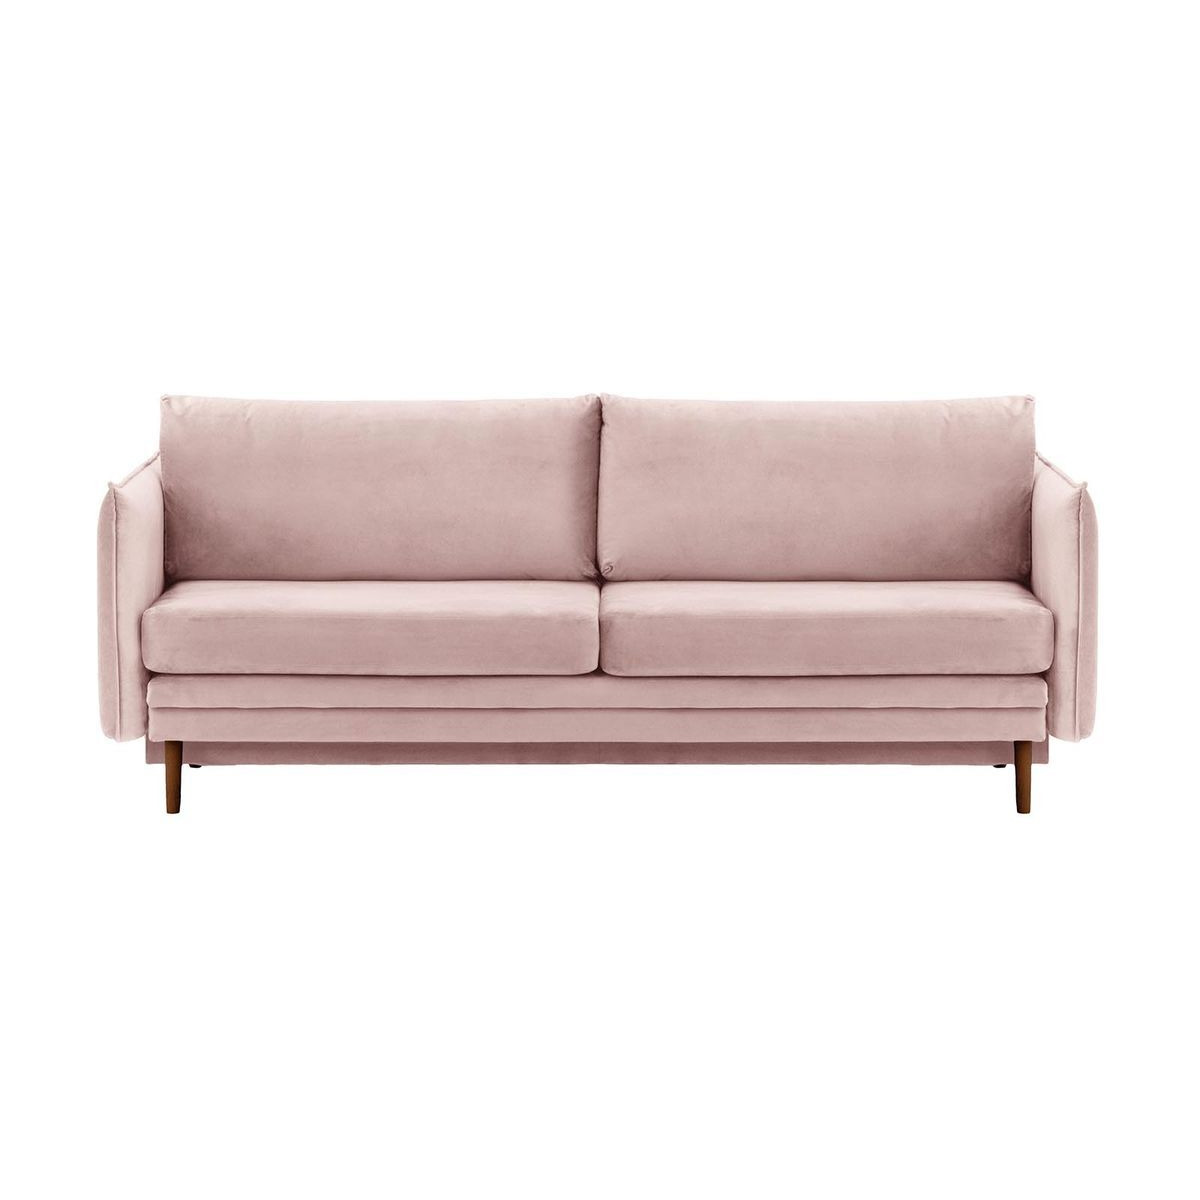 Nimbus Sofa Bed with Storage, lilac, Leg colour: dark oak - image 1